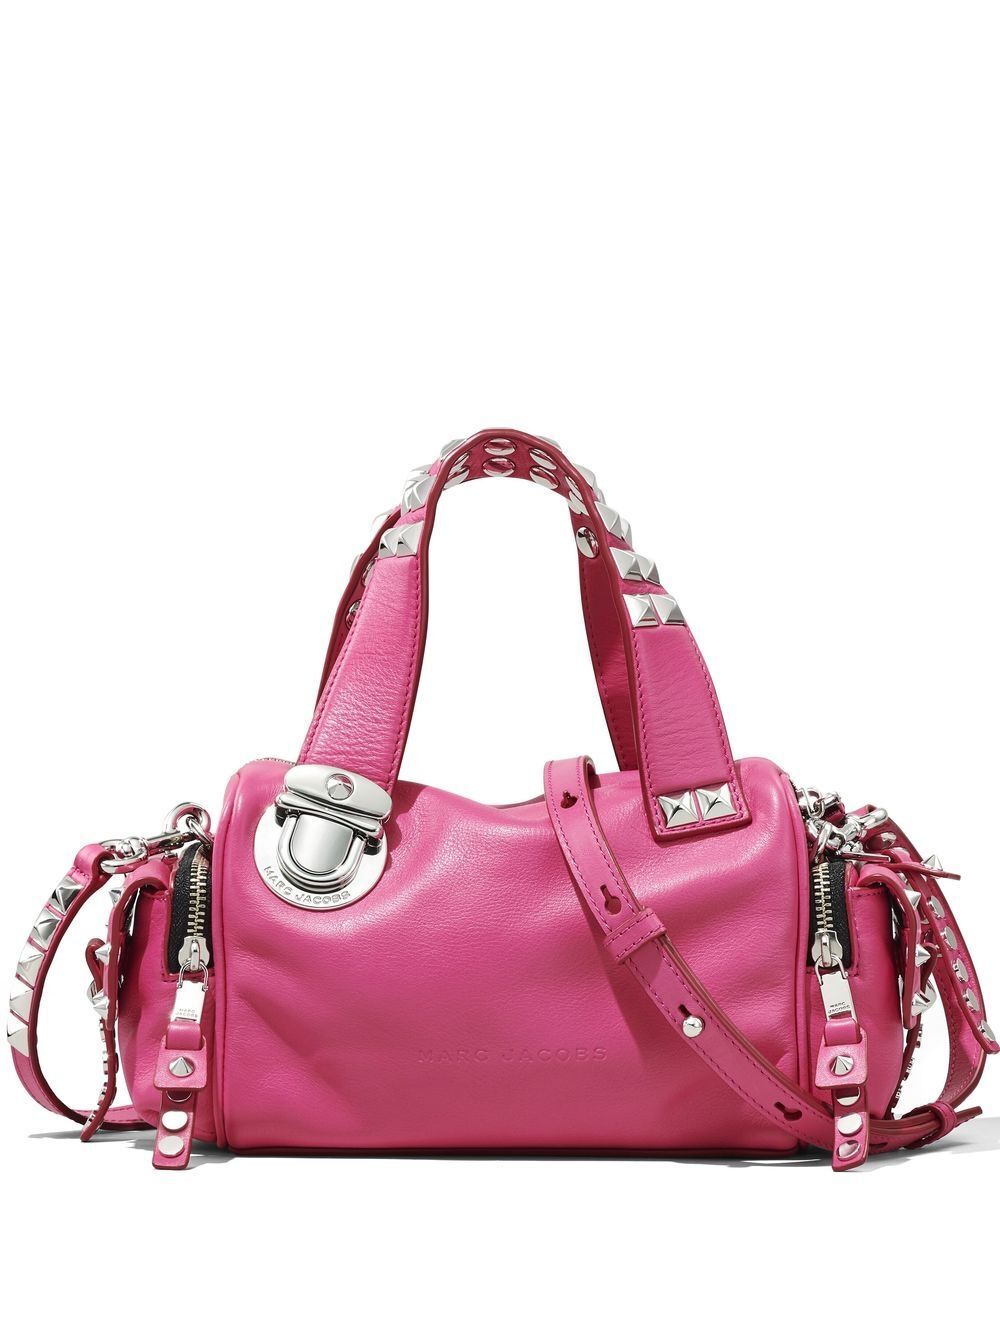 Marc Jacobs The Studded Pushlock mini satchel - Pink